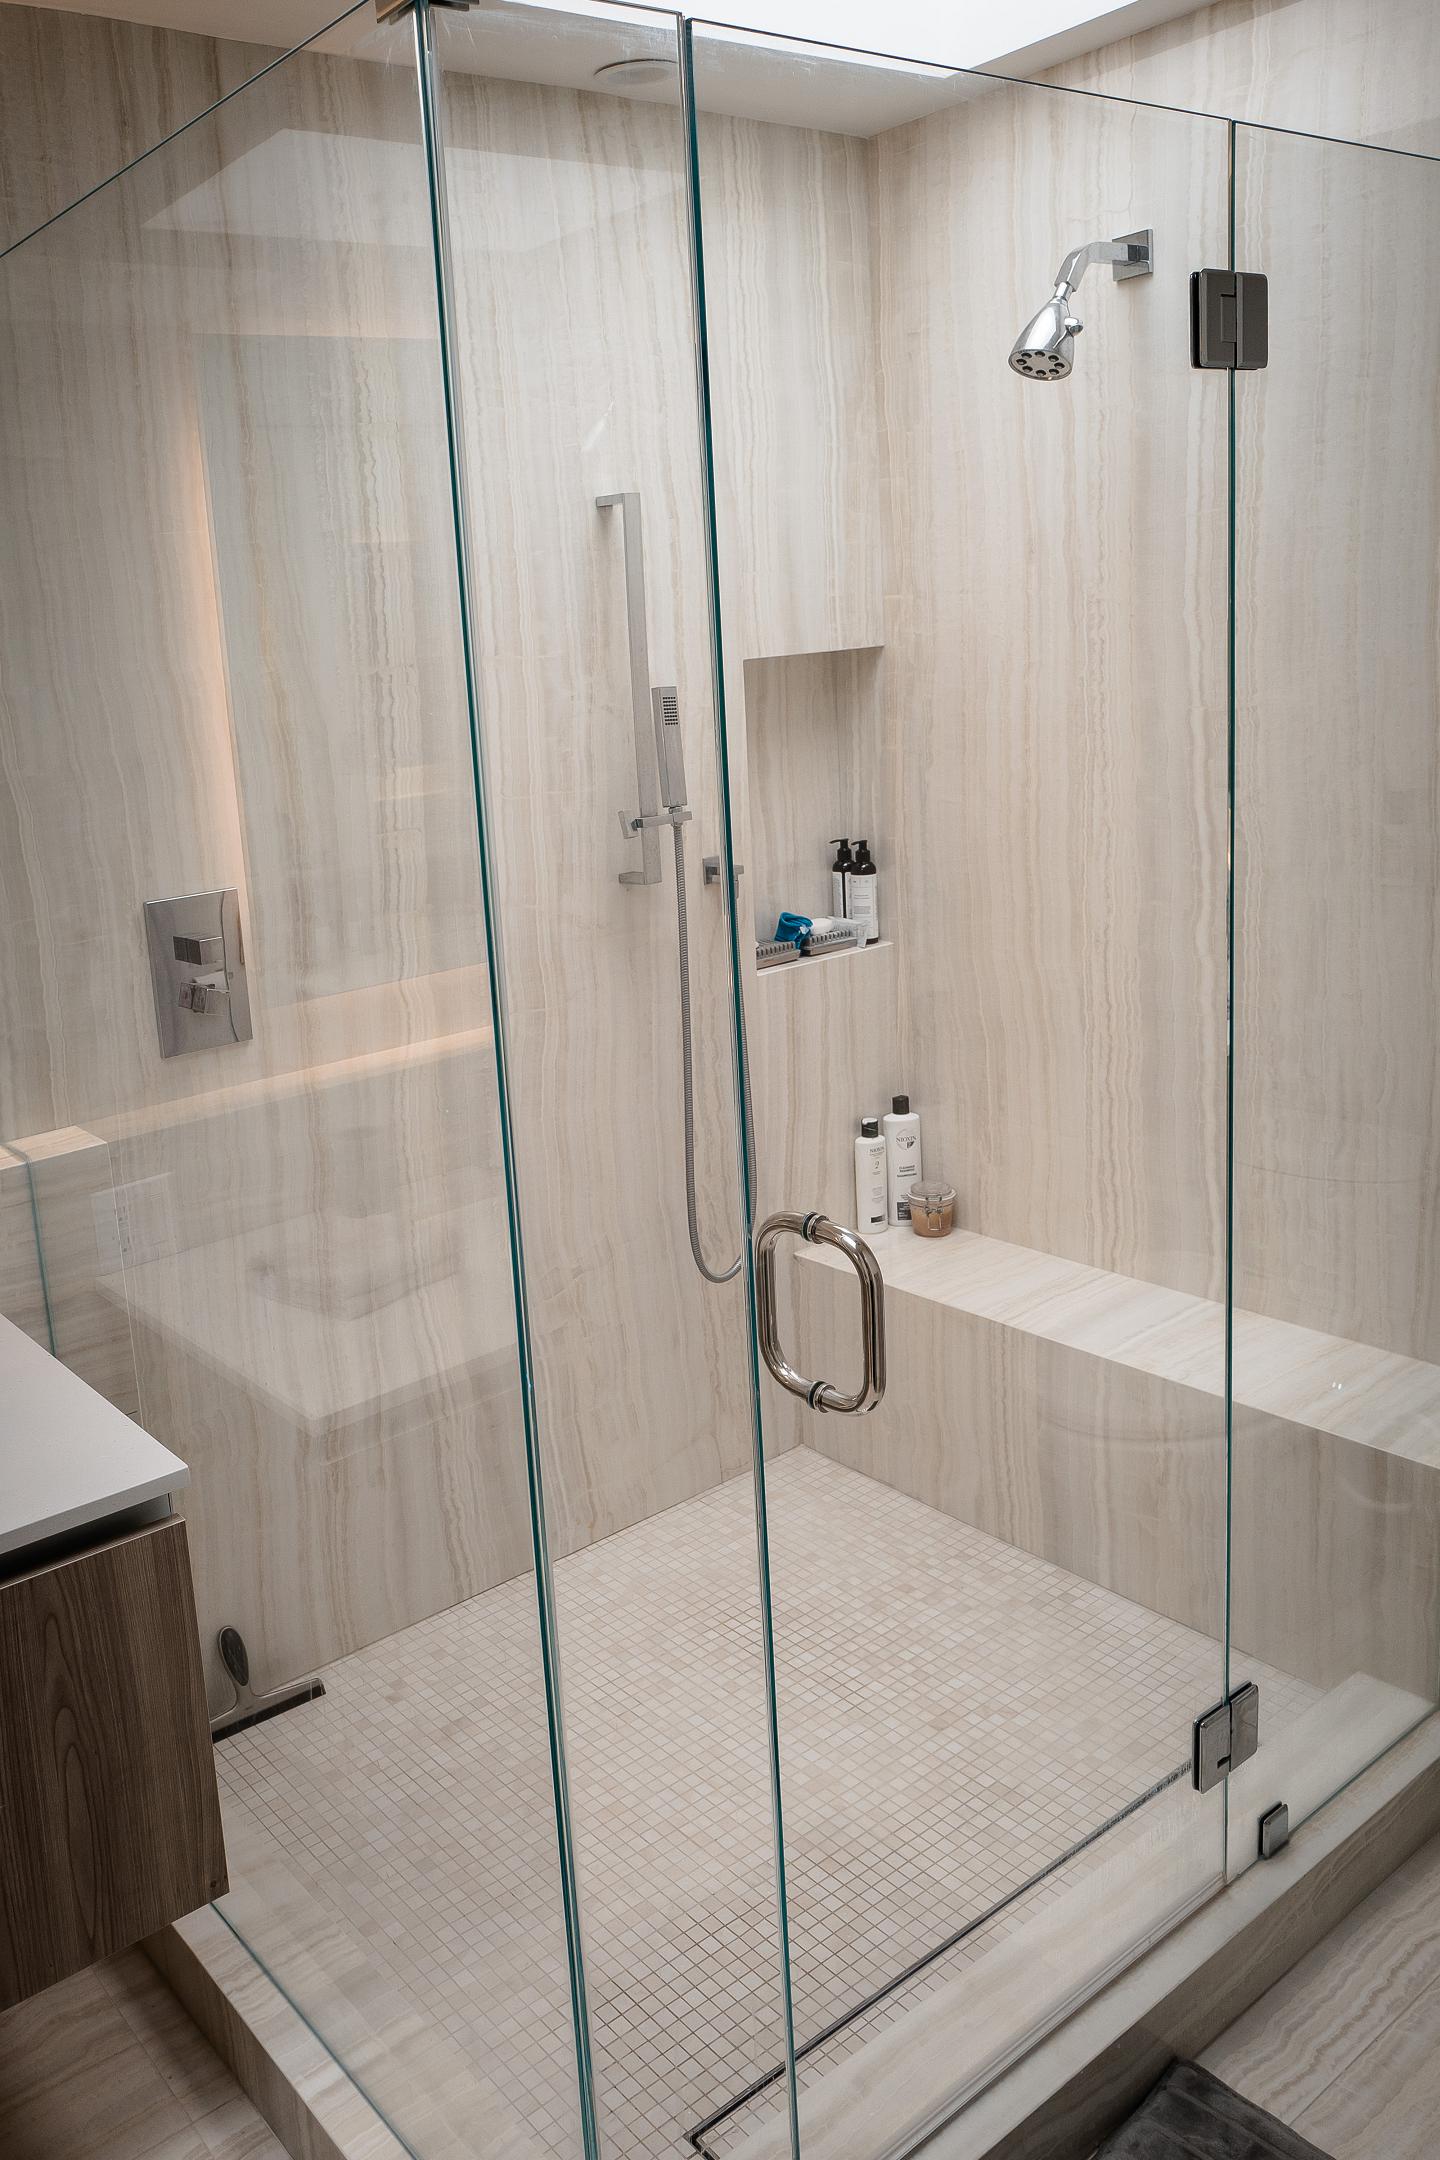 Modern bathroom with glass shower enclosure.